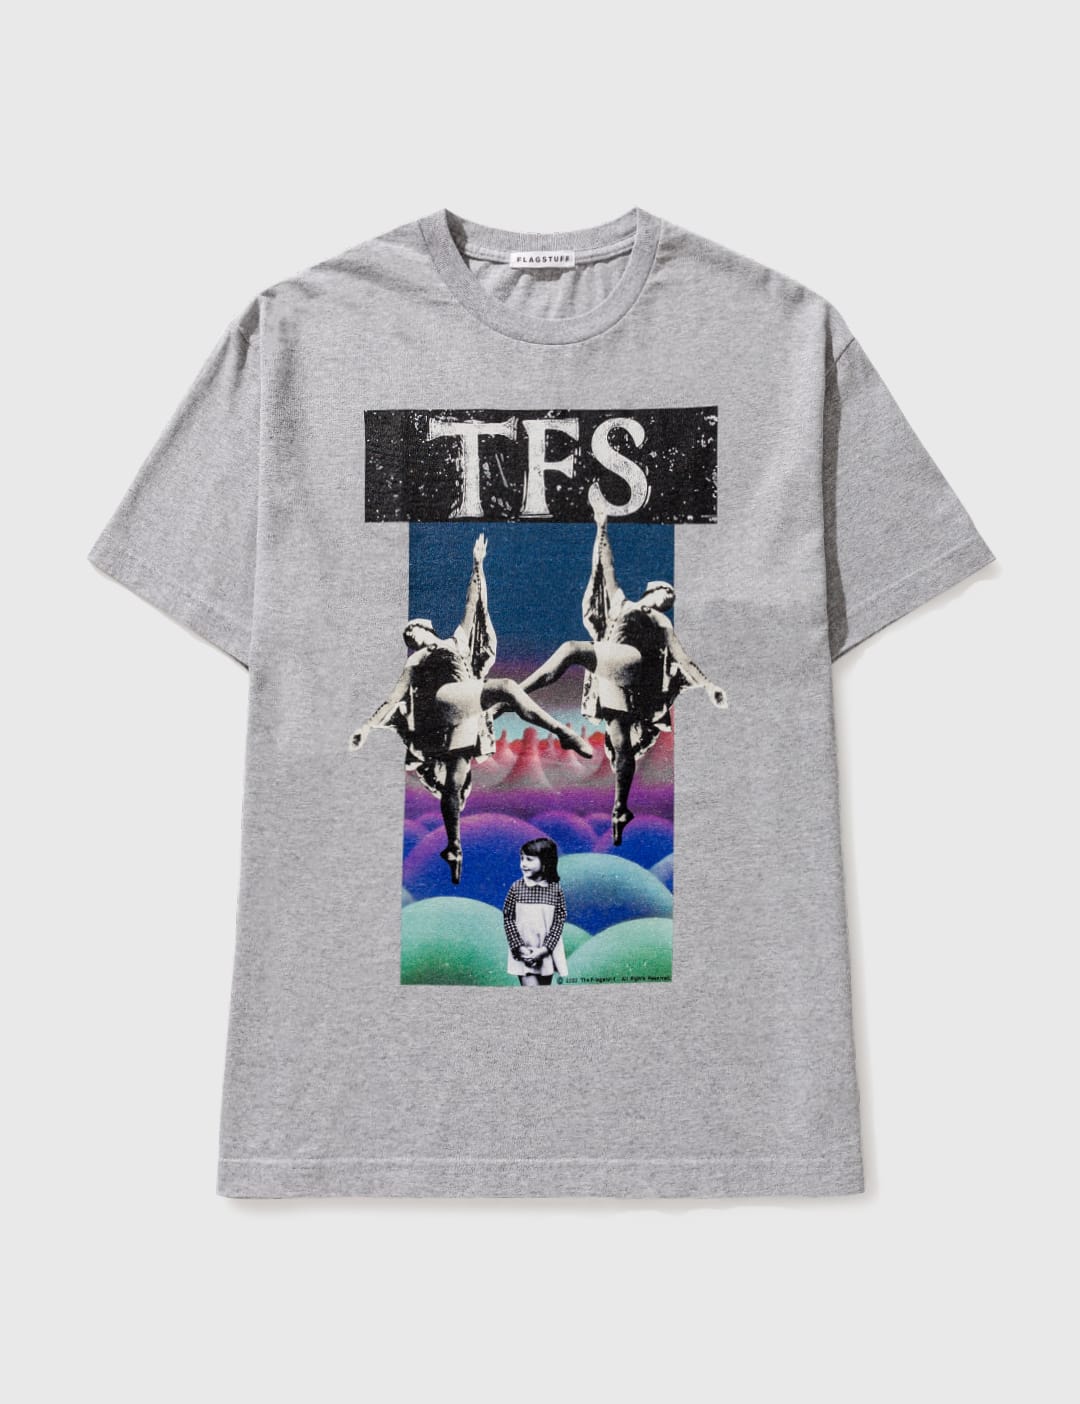 Flagstuff - Dream And Reality L/S T-Shirt B | HBX - Globally 